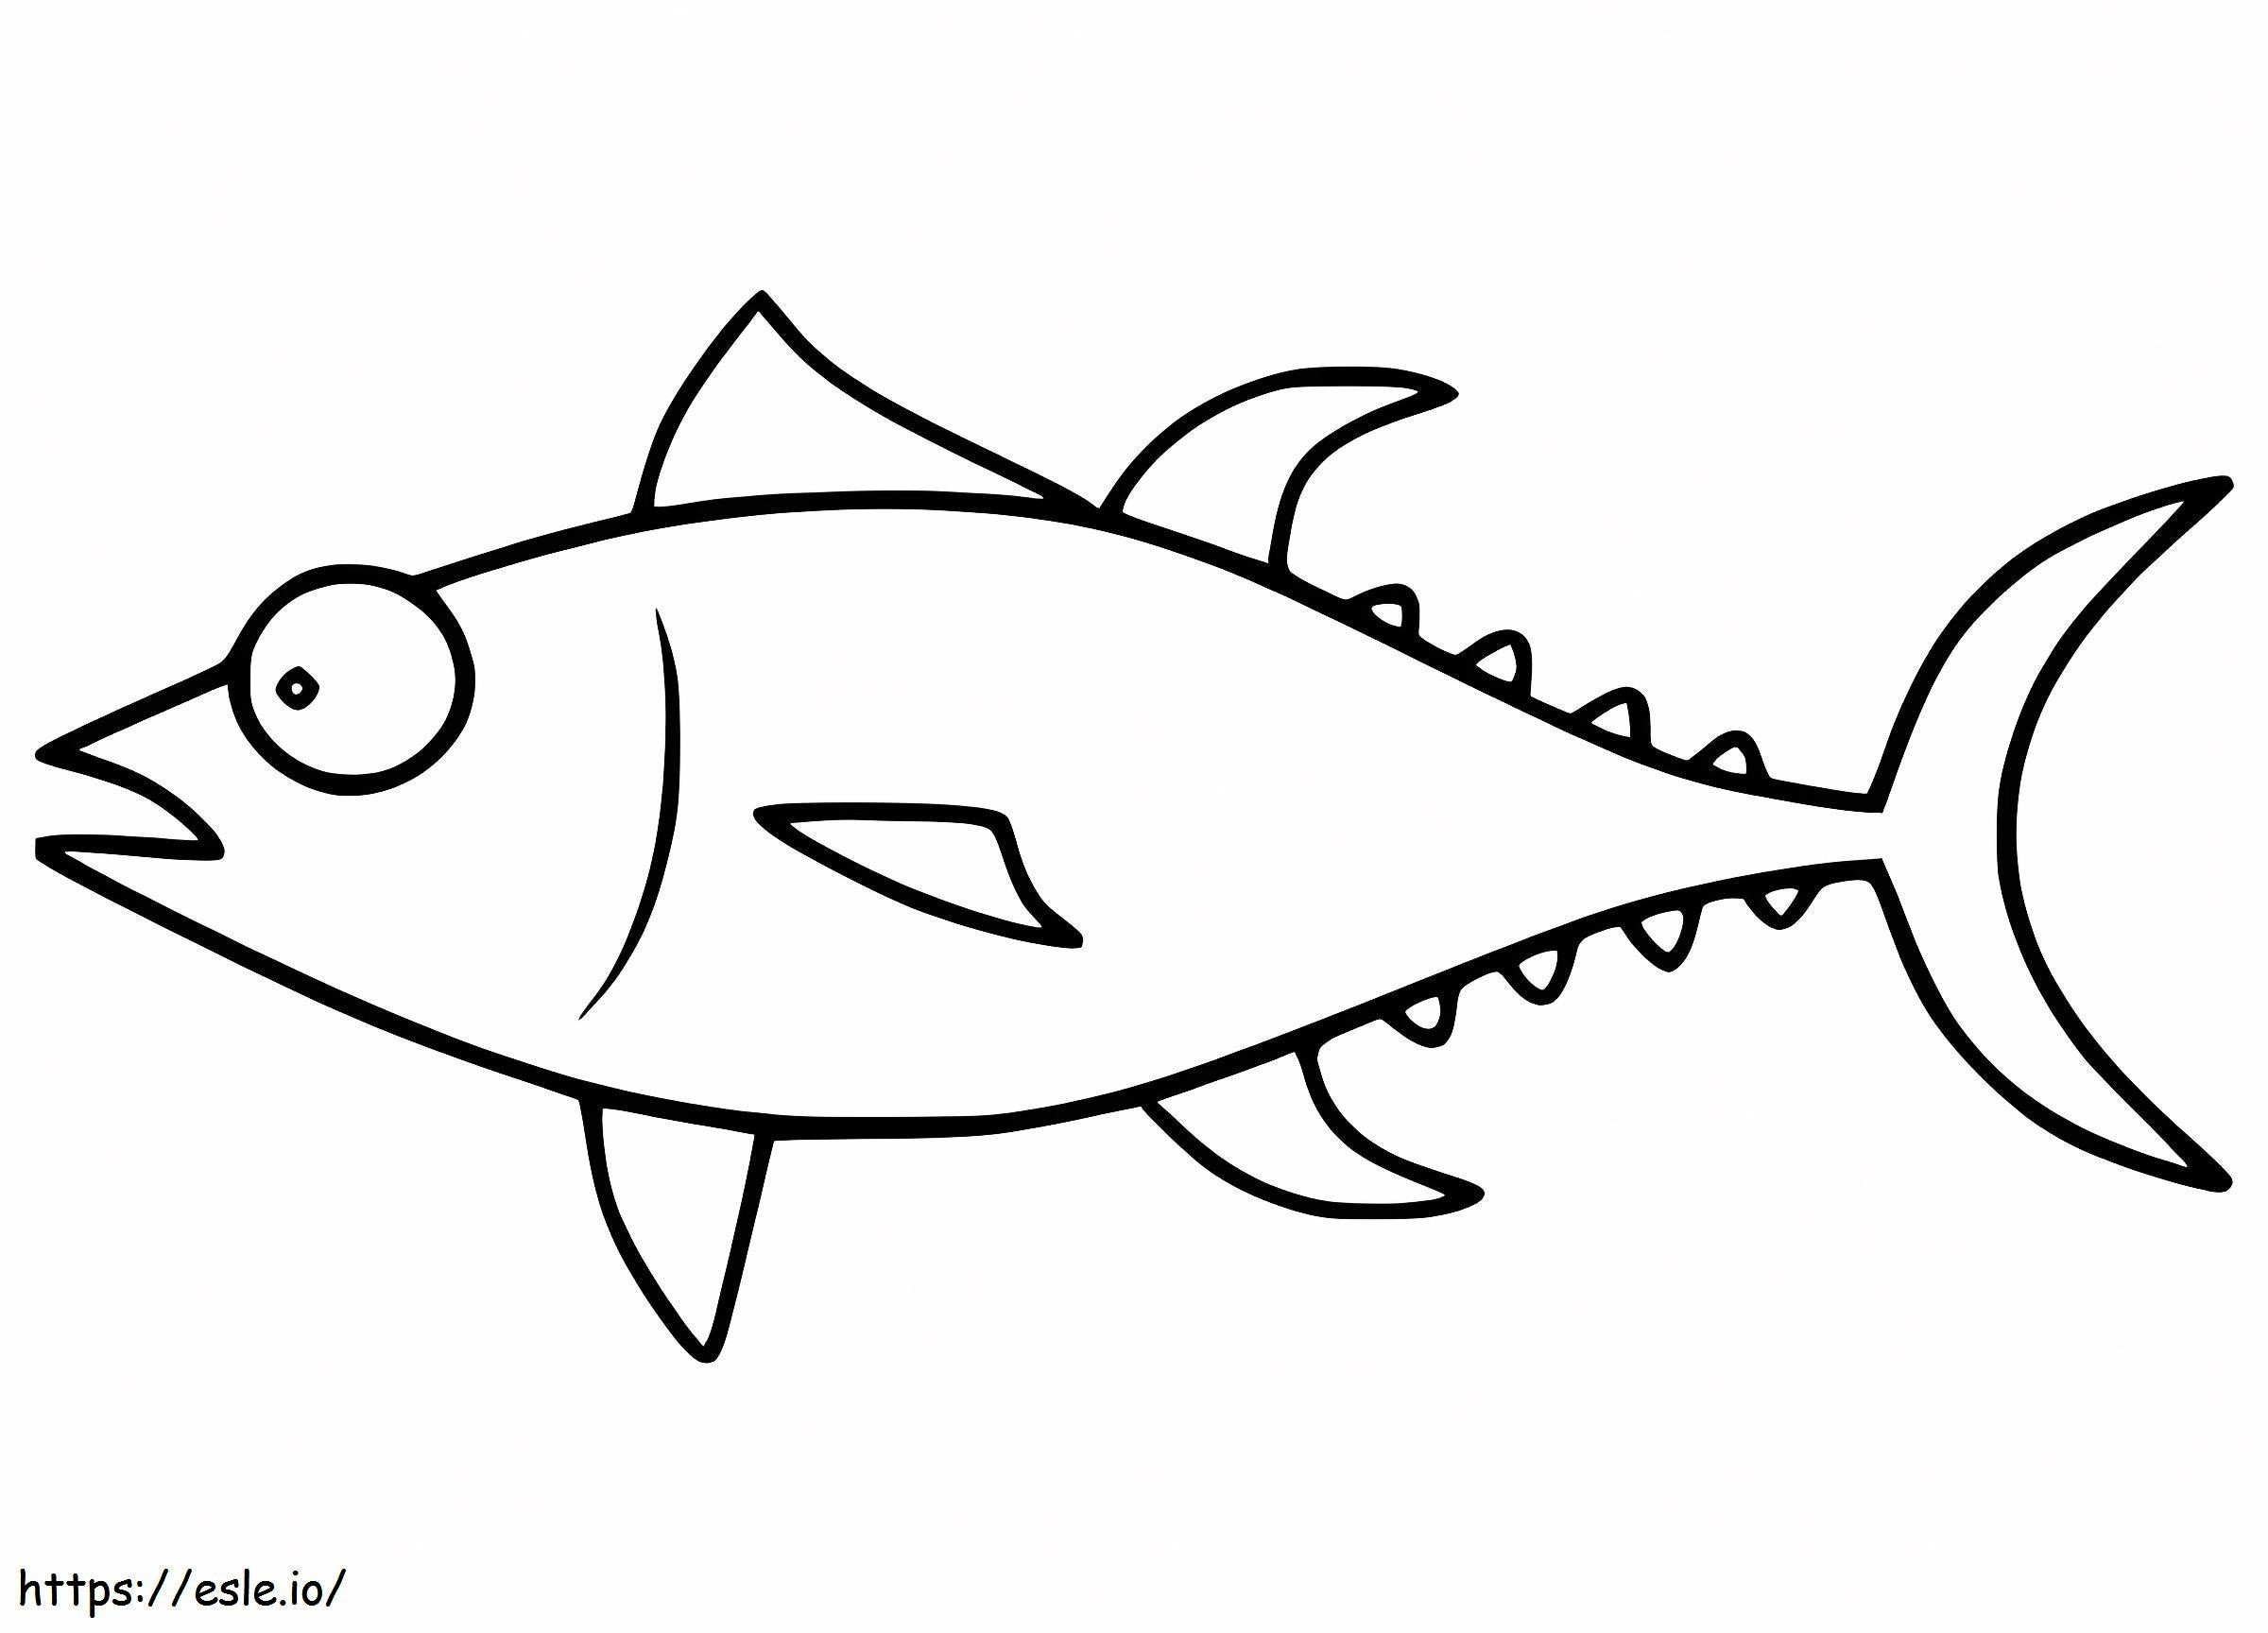 Easy Tuna Fish coloring page